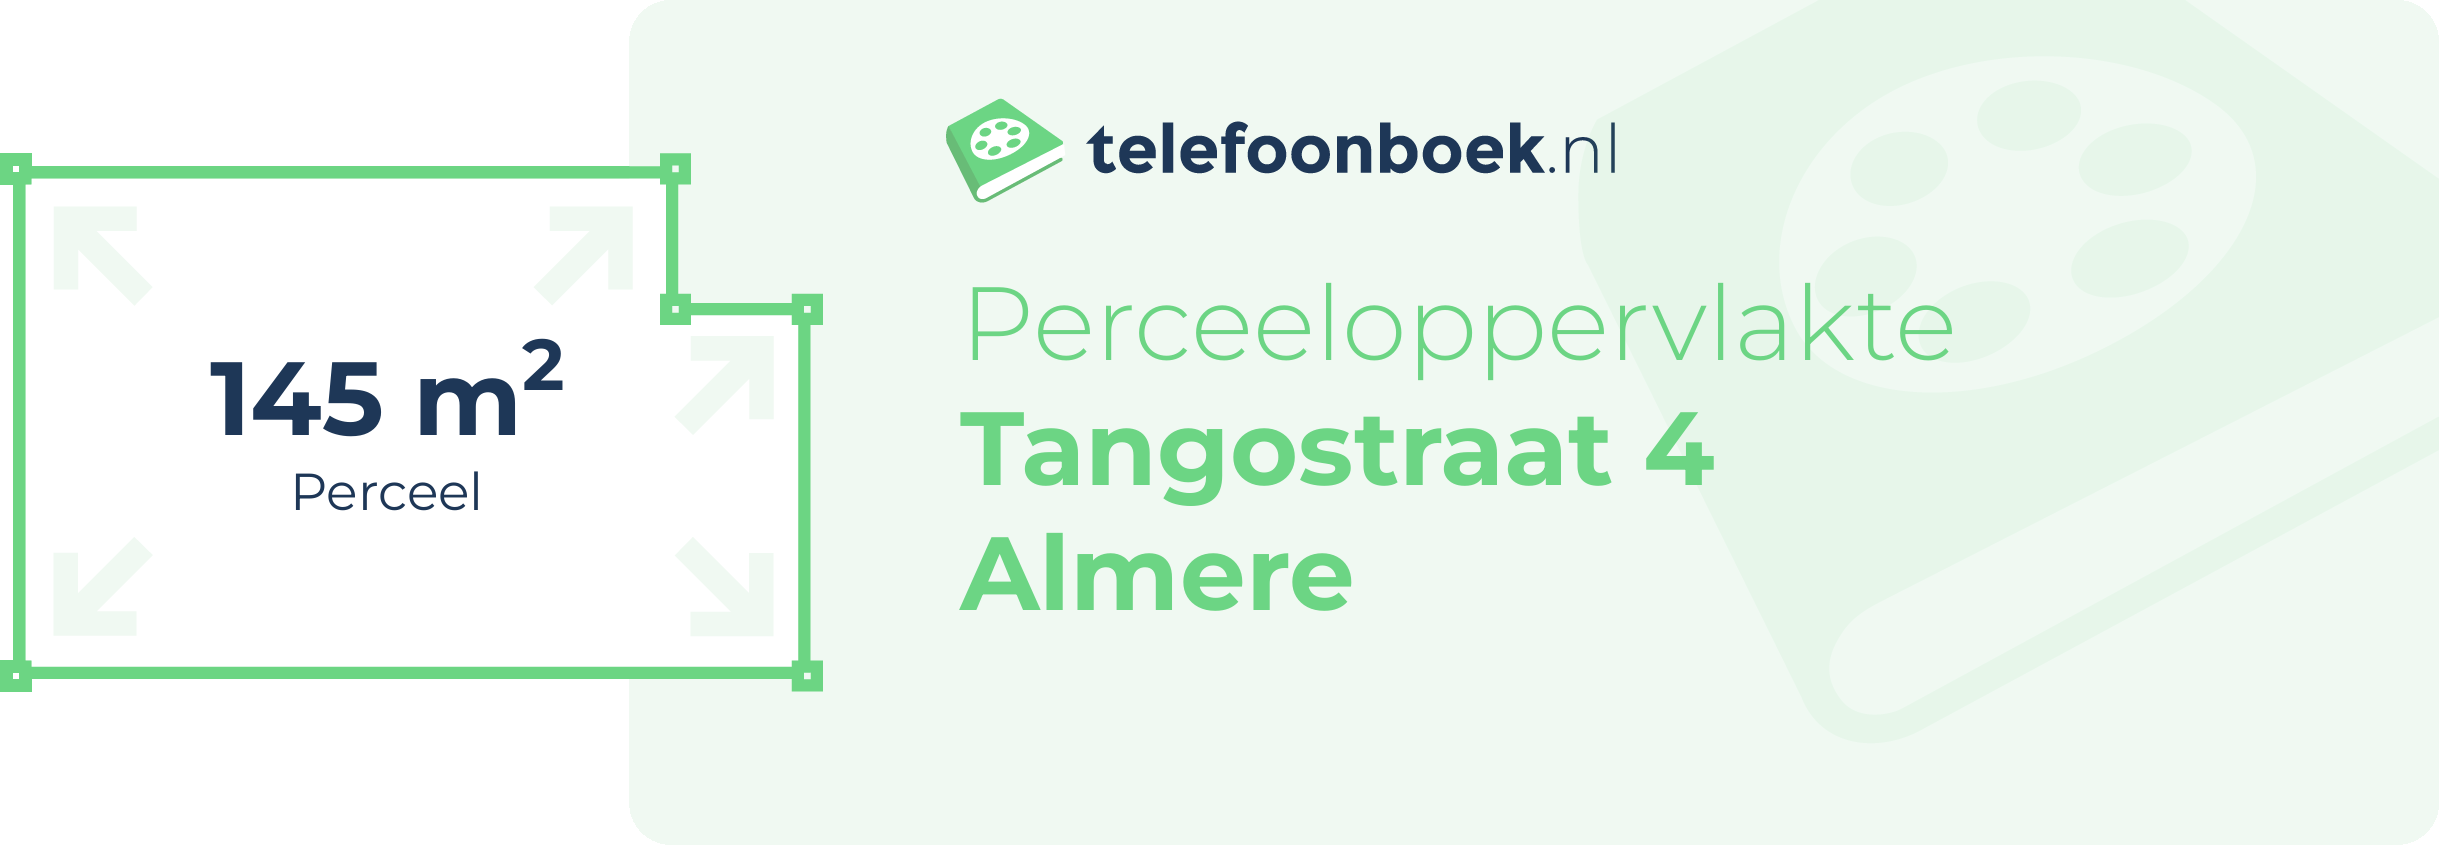 Perceeloppervlakte Tangostraat 4 Almere